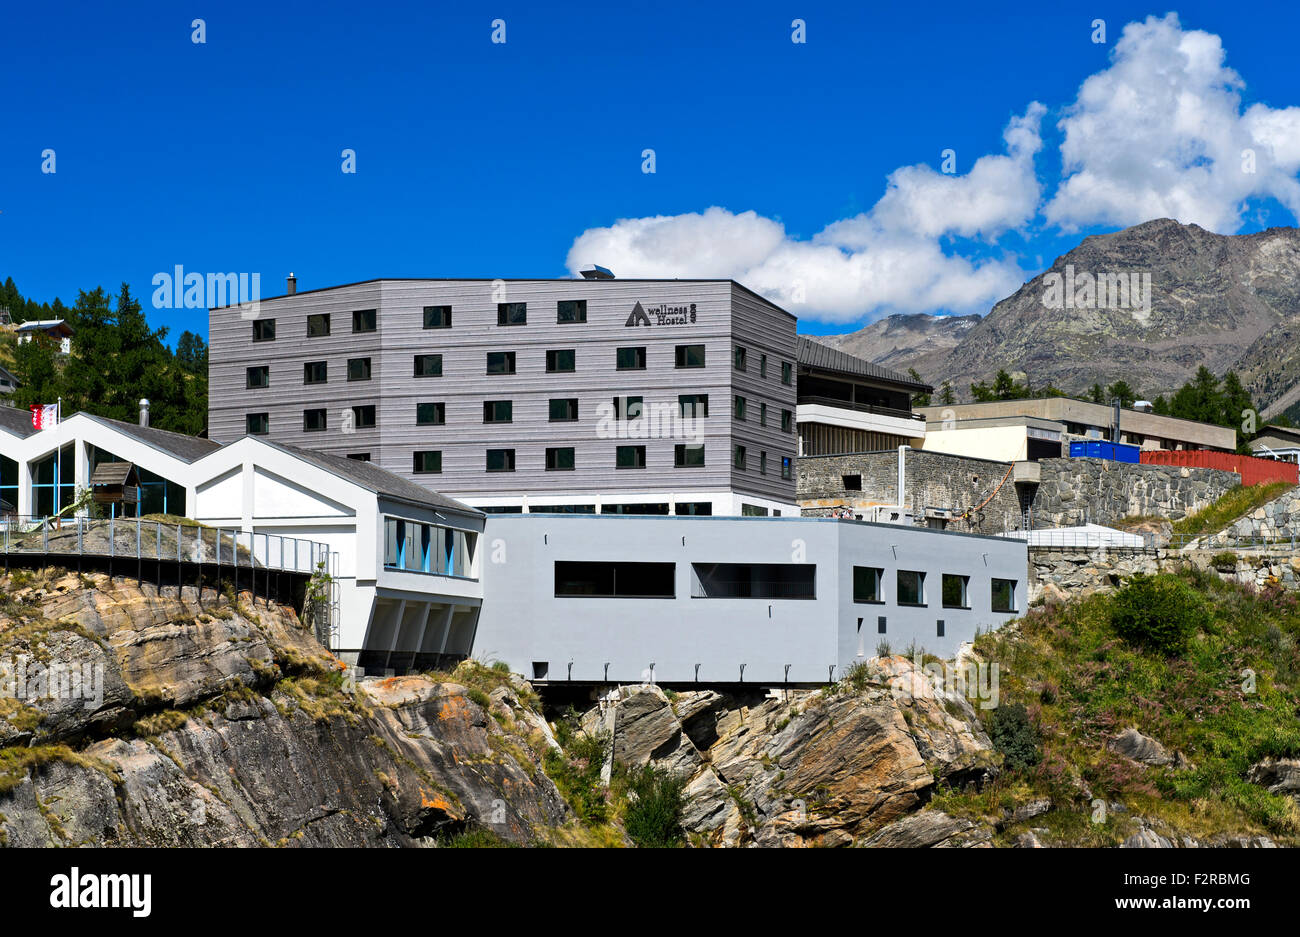 Youth hostel wellnessHostel4000, Saas-Fee, Valais, Switzerland Stock Photo